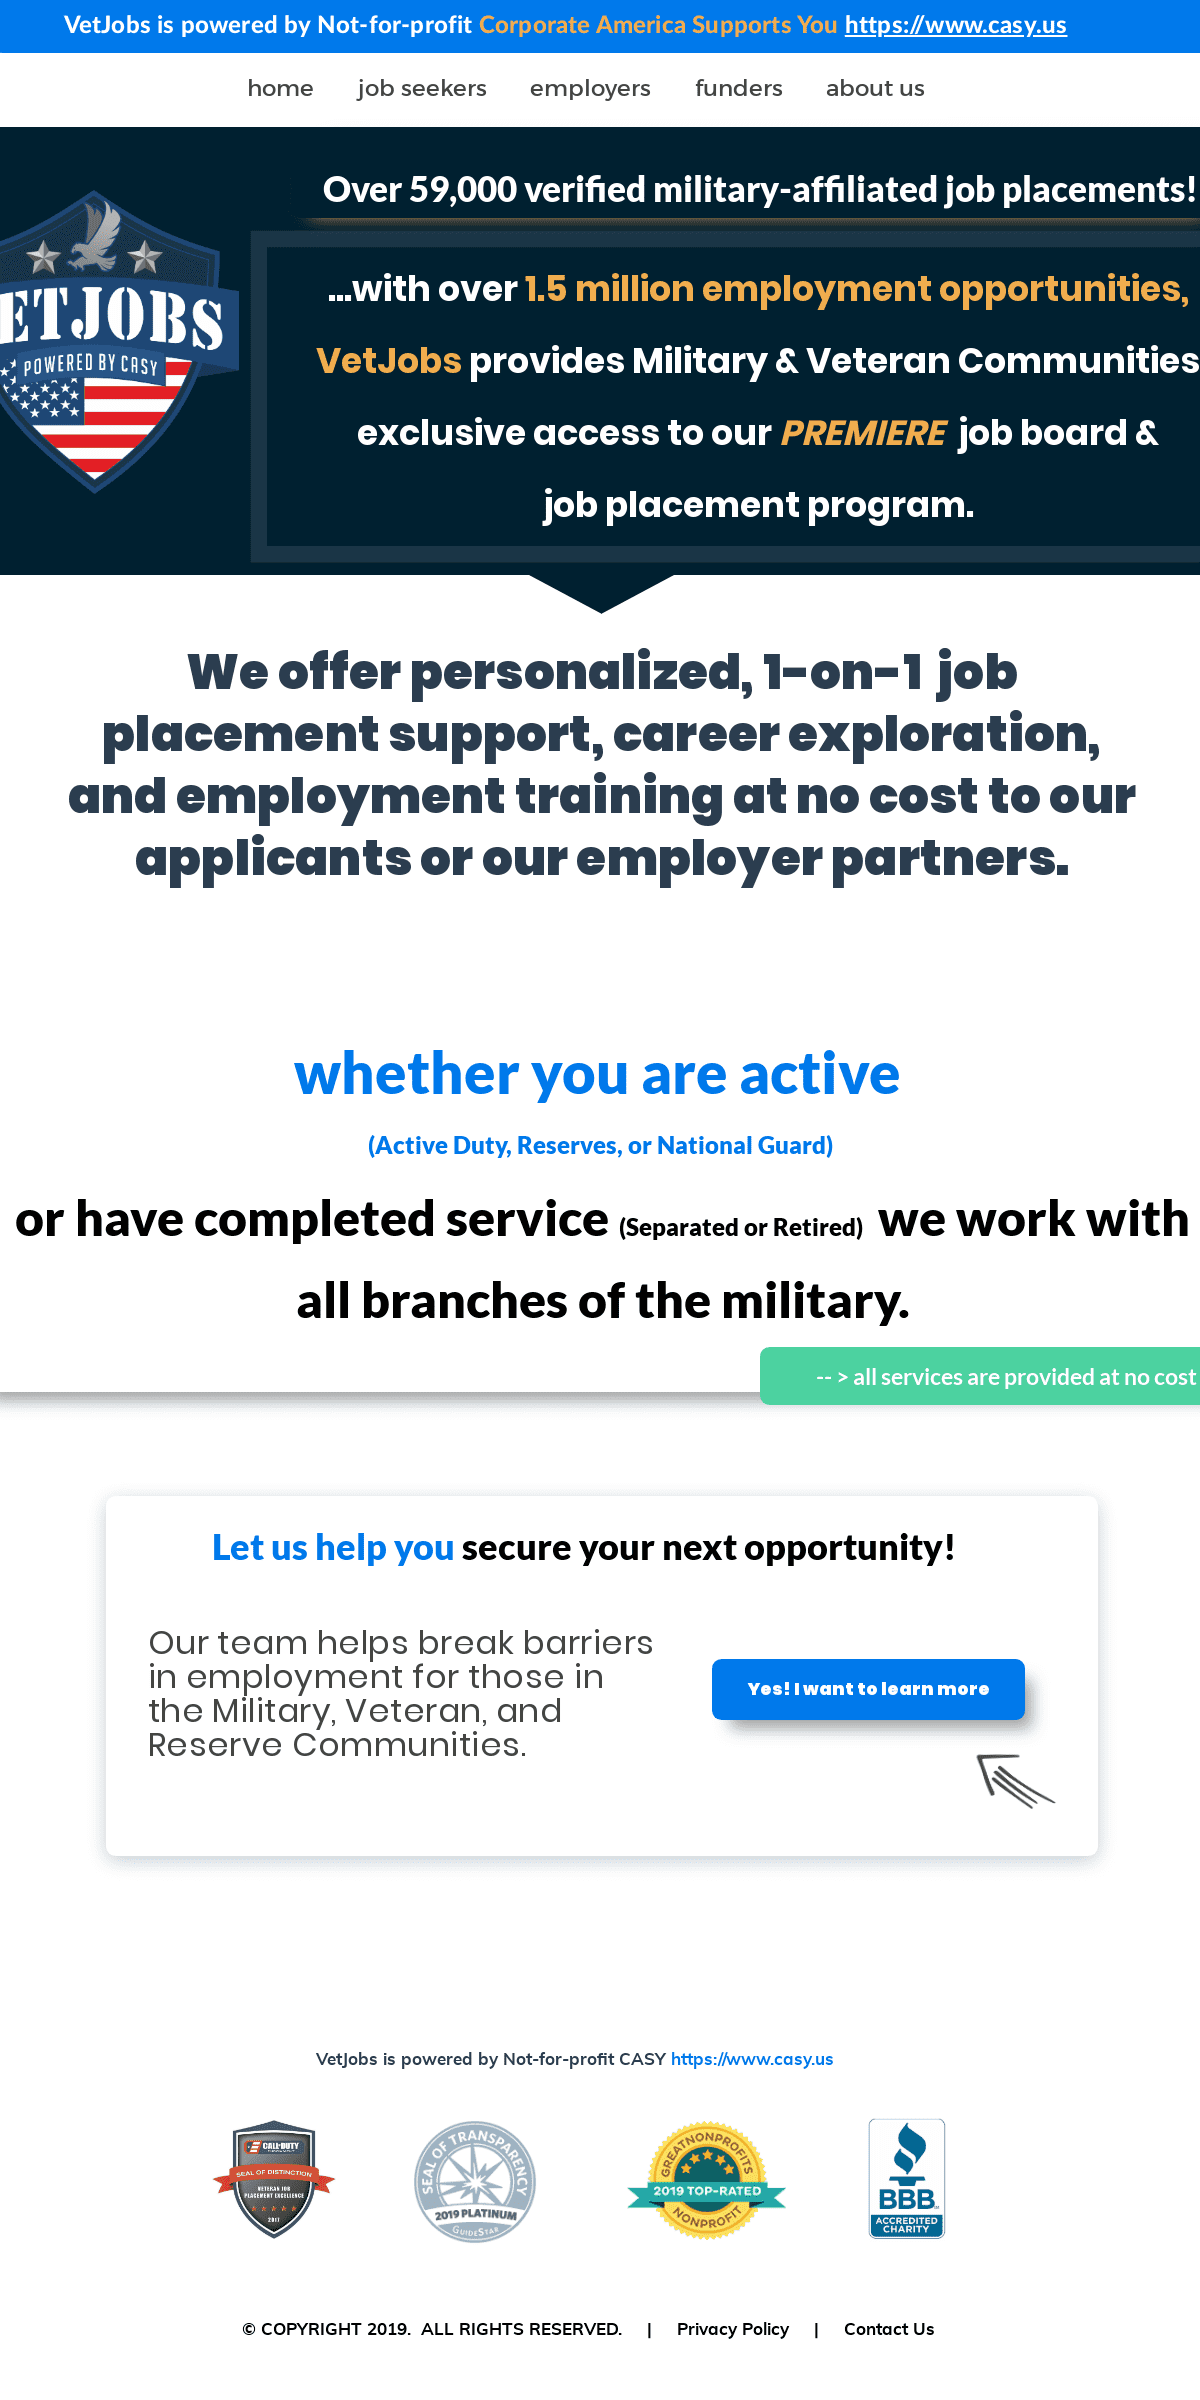 A complete backup of vetjobs.com